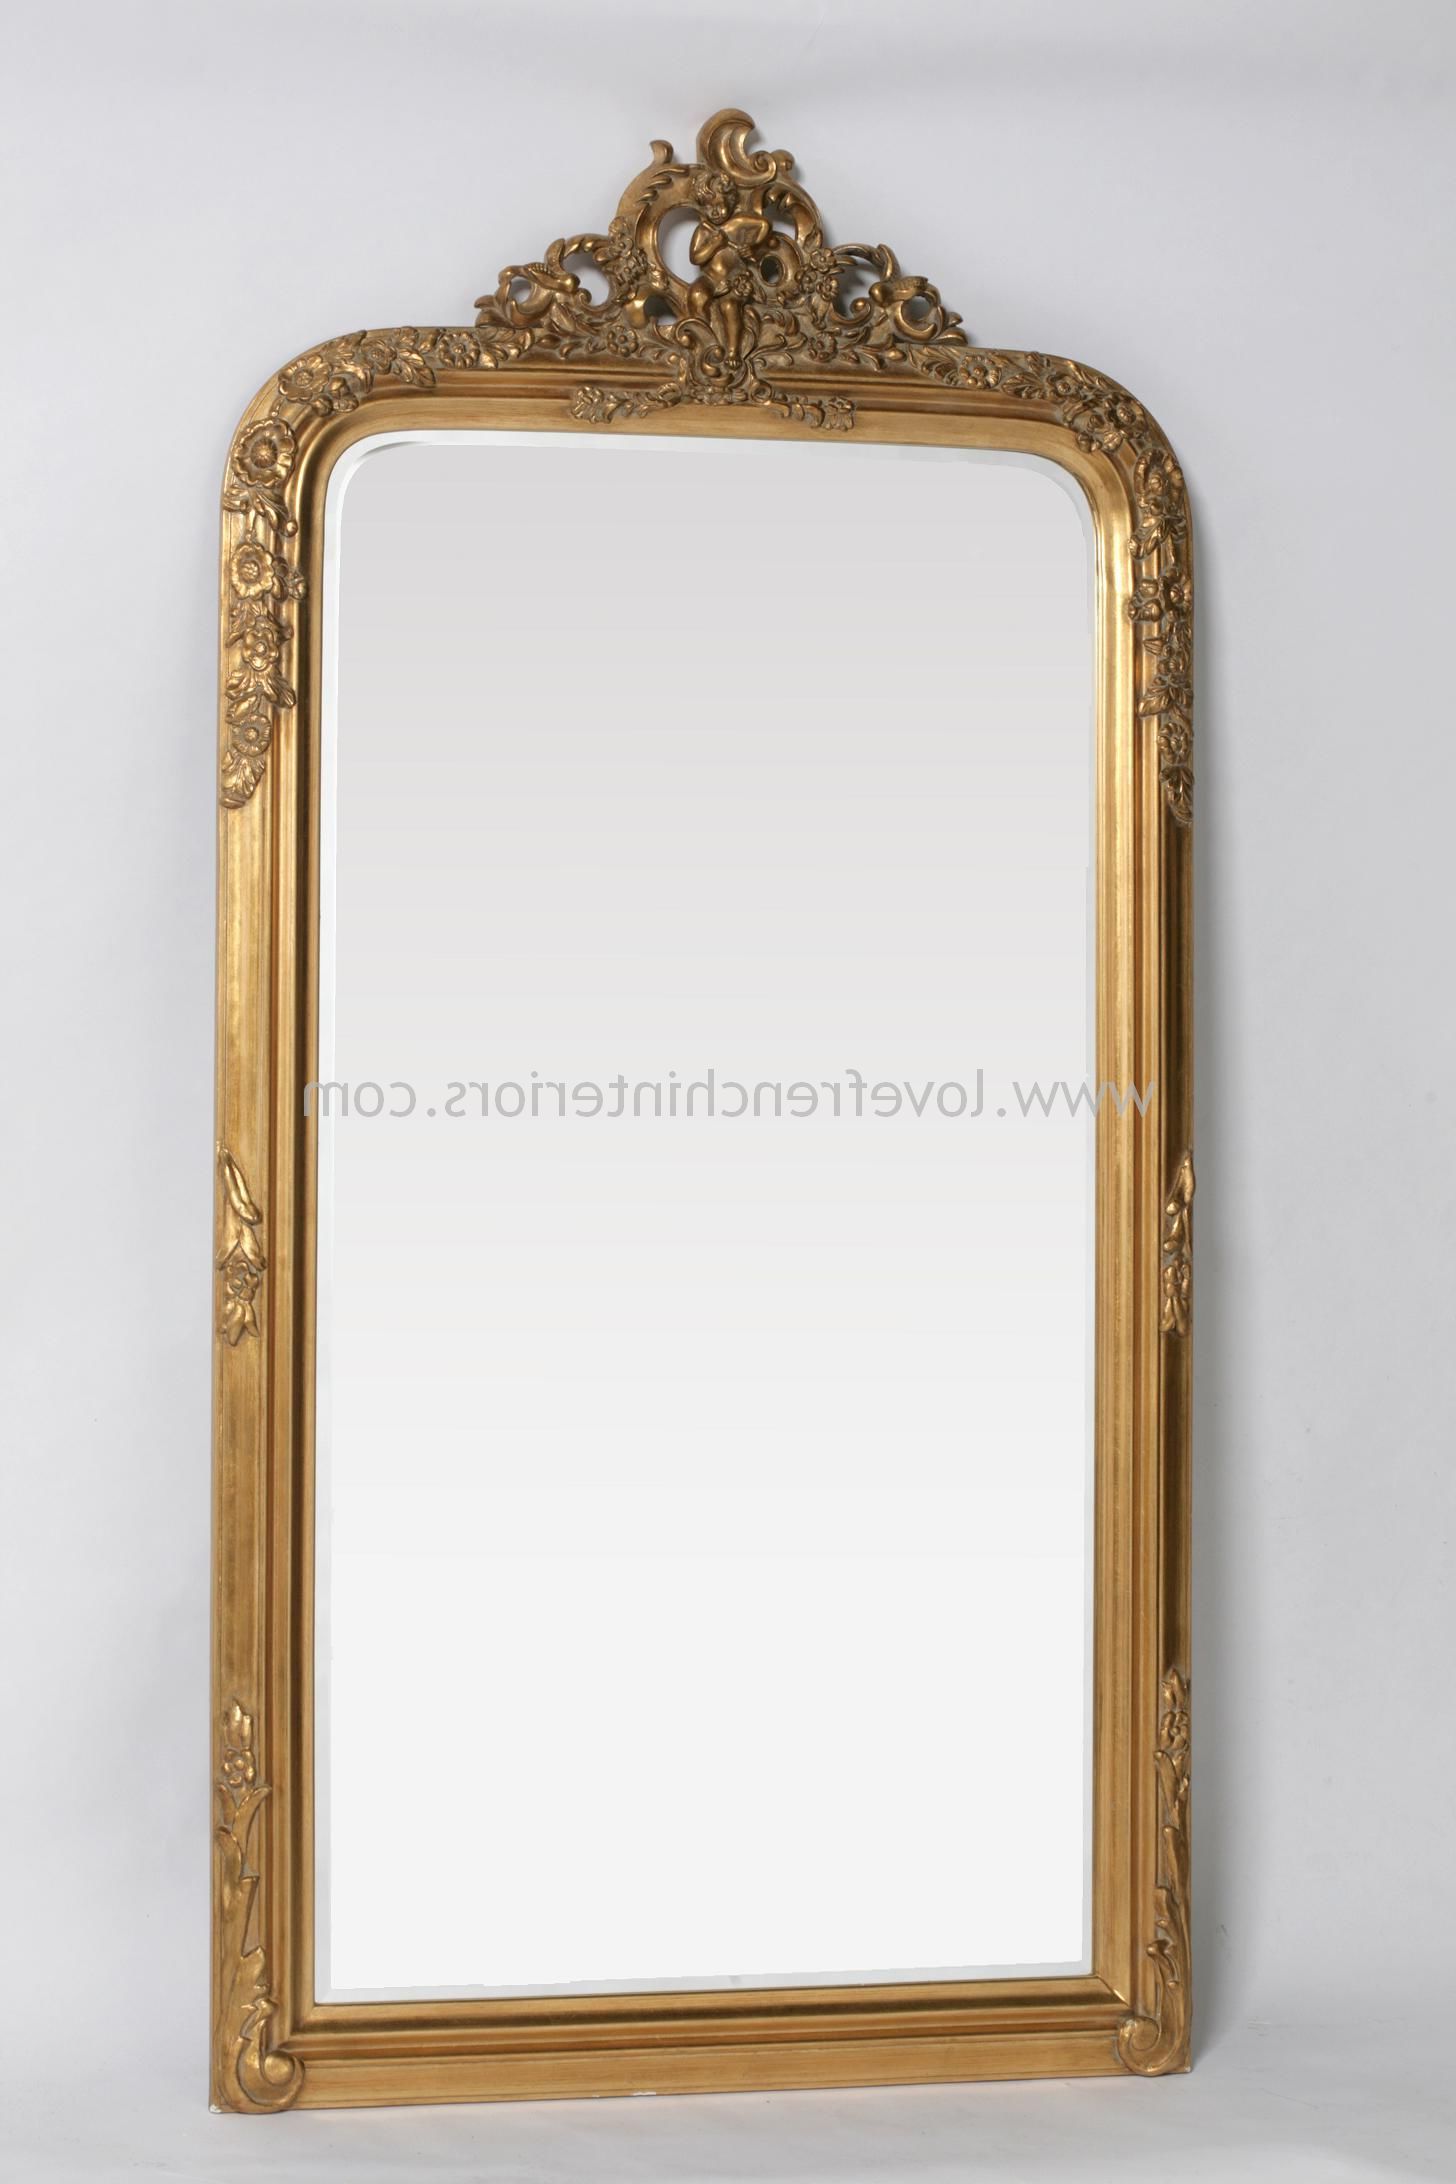 Antique Gold Floor Standing Mirror With Crest In Trendy Antiqued Bronze Floor Mirrors (View 5 of 15)